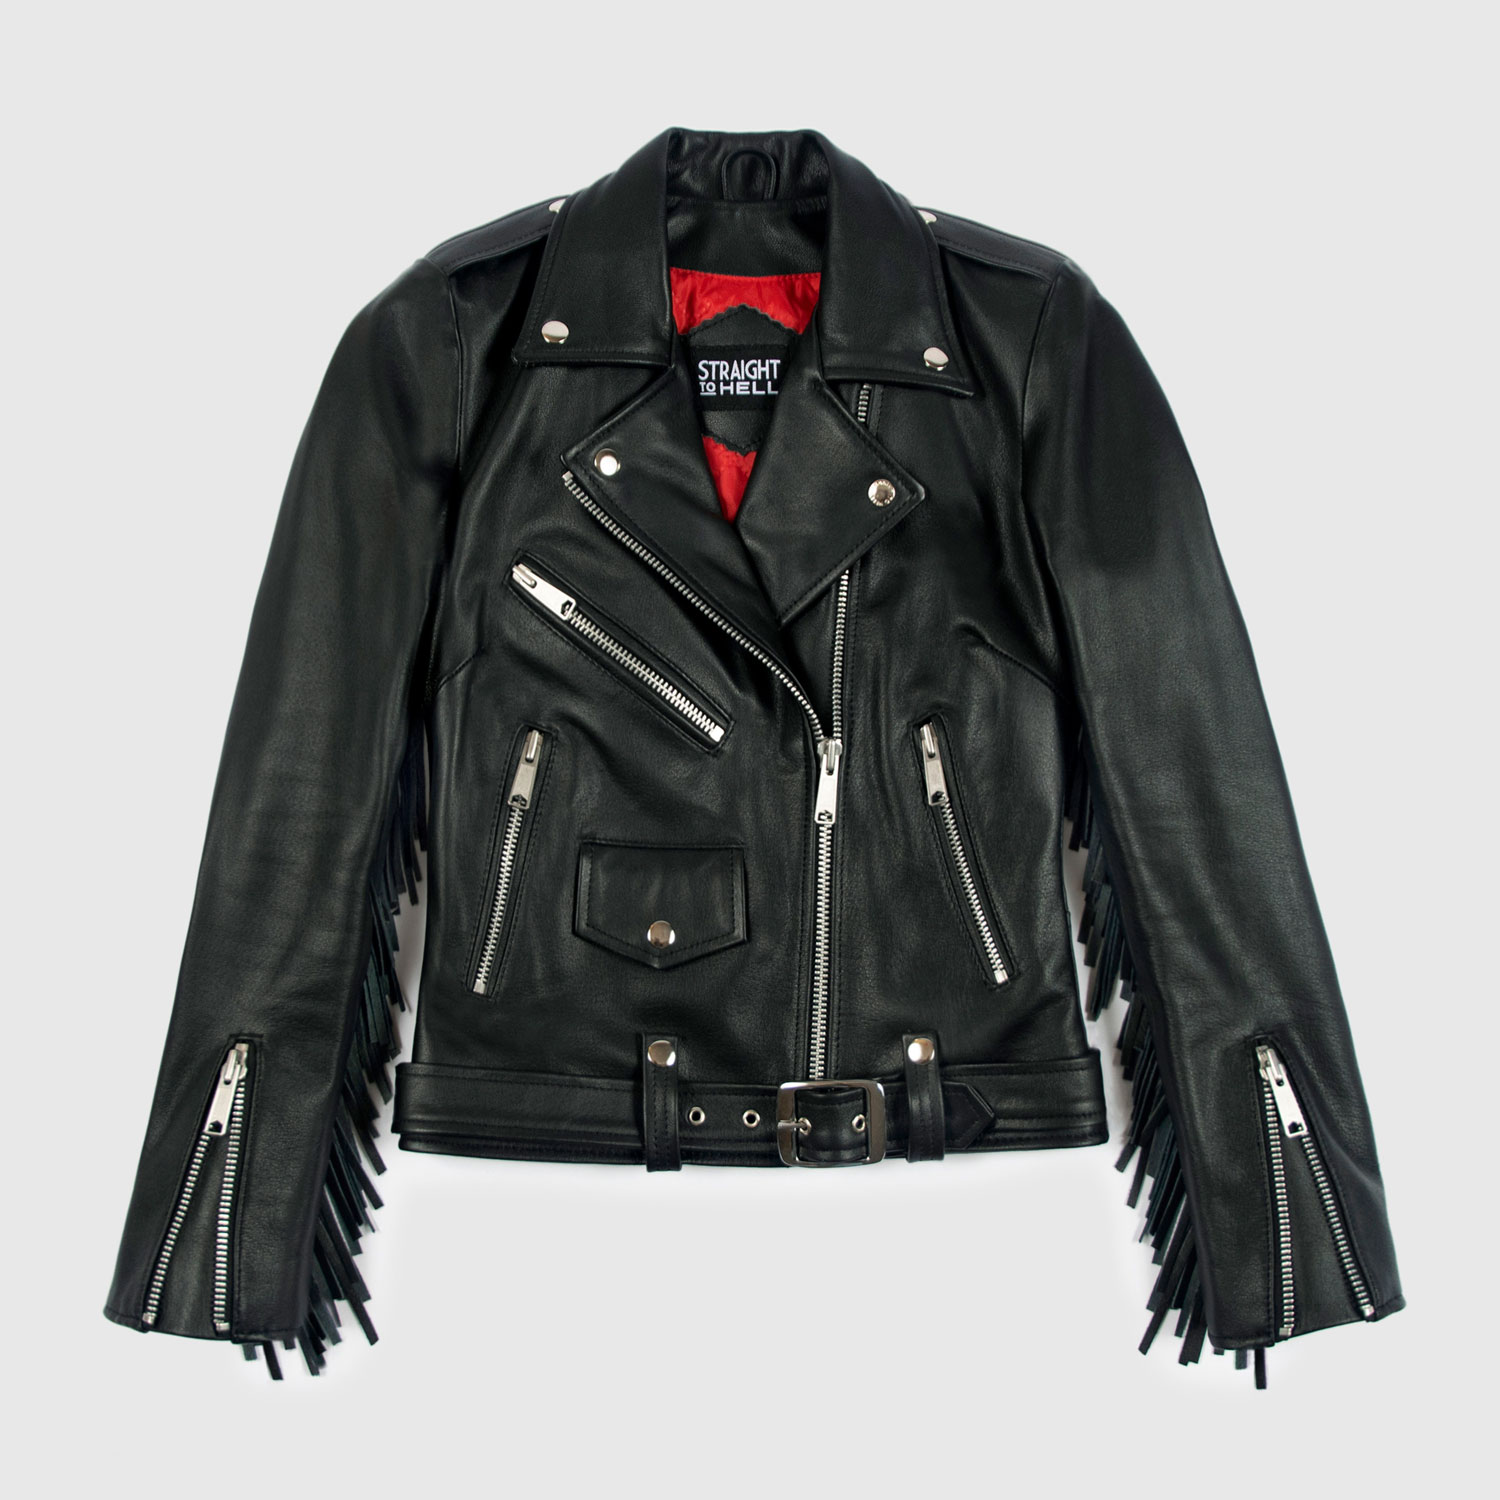 Fringe - Fringe Jacket Commando Hell To with | Straight Apparel Leather